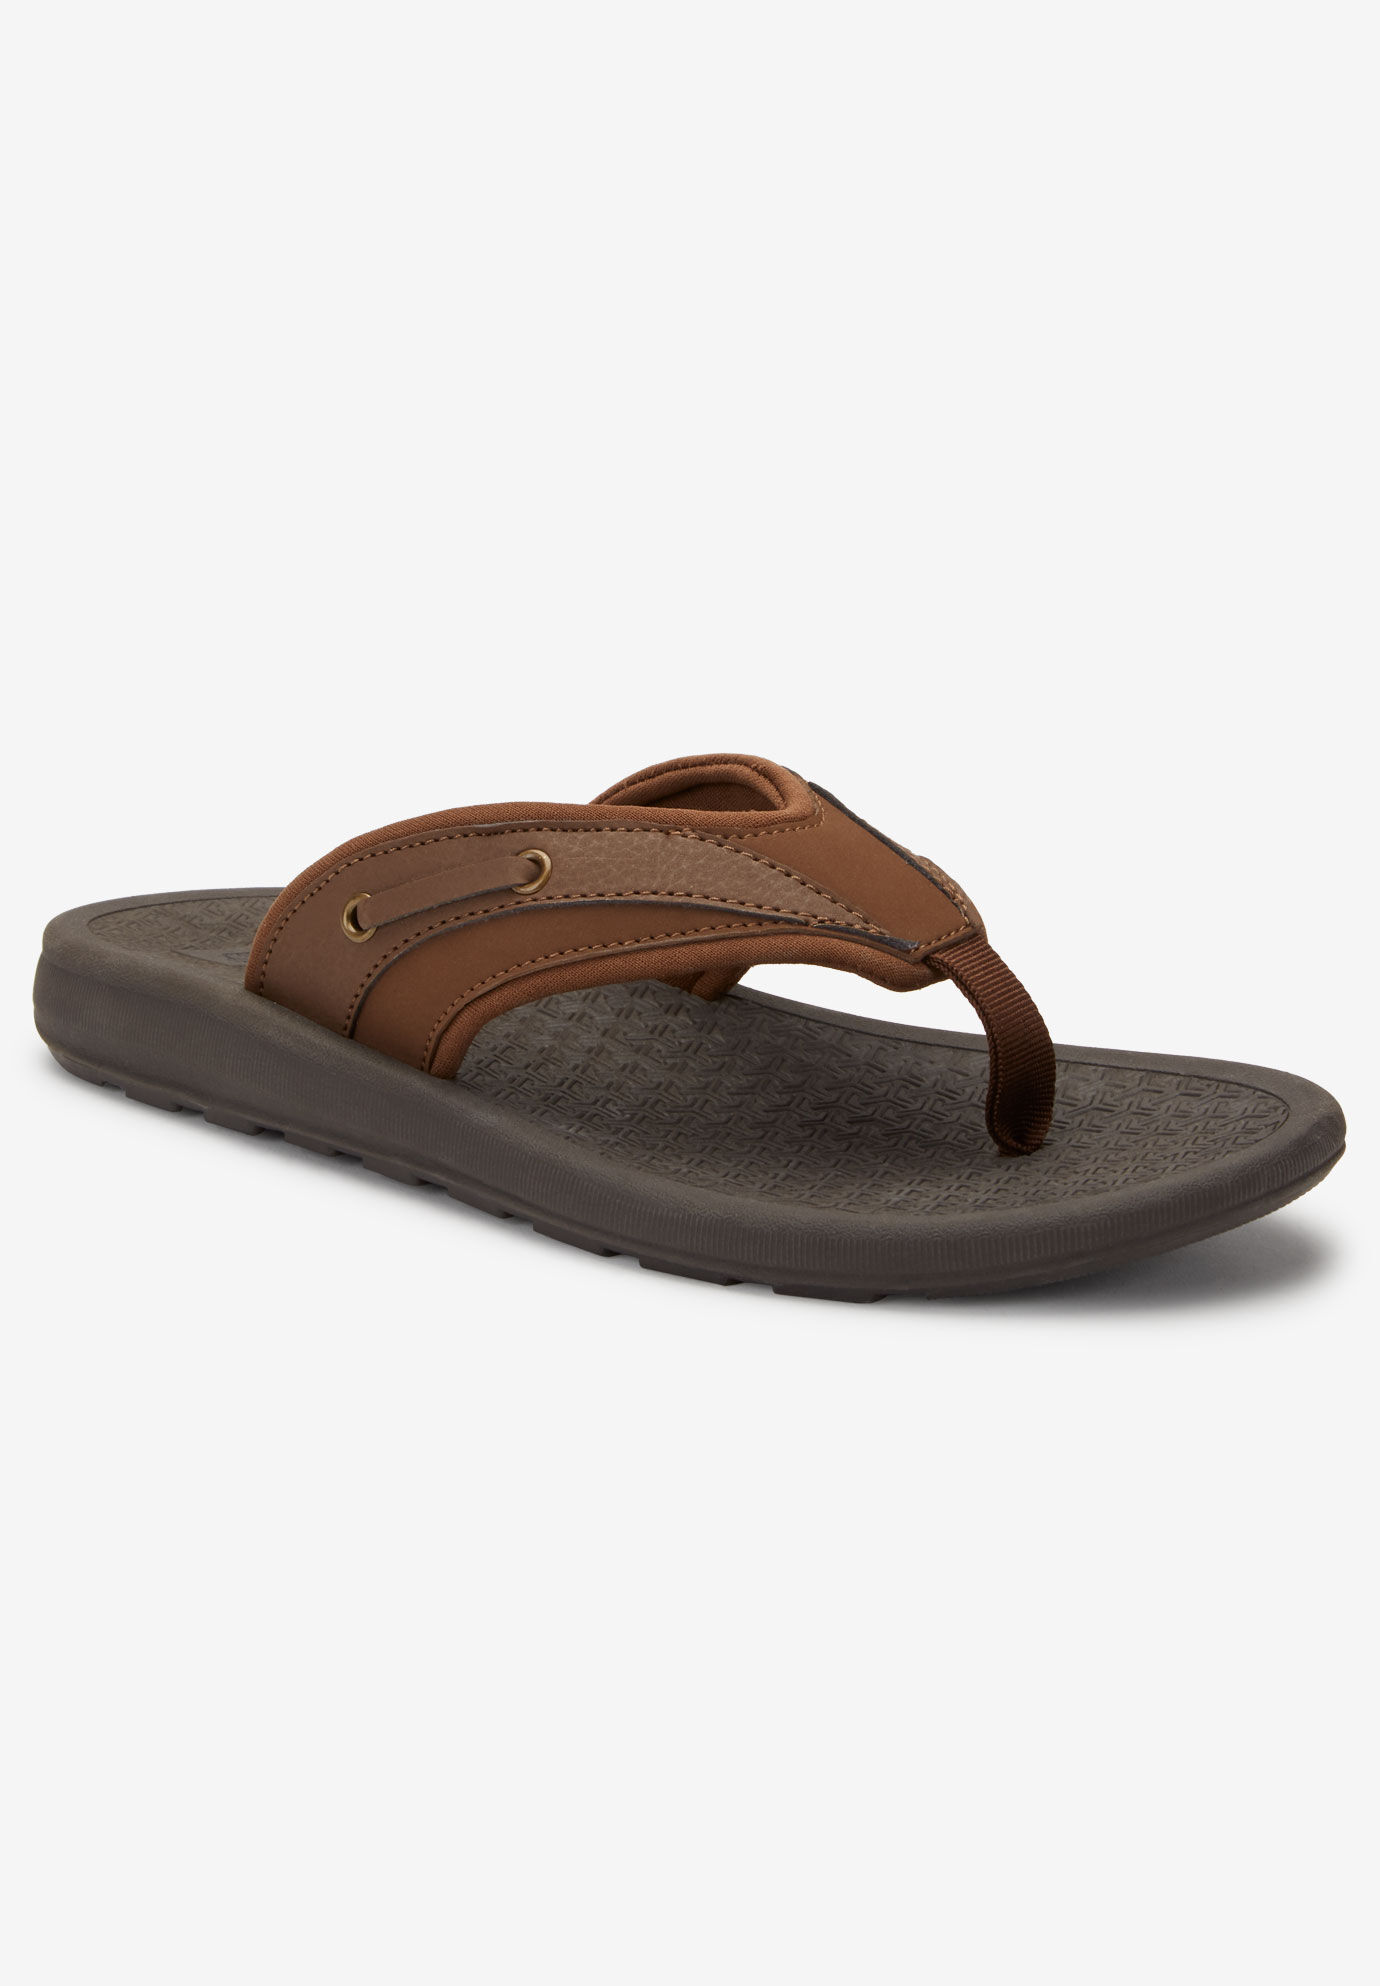 Mens Leather Sandals Walking Memory Foam Wide Fit Flip Flop Summer Sandals Shoes